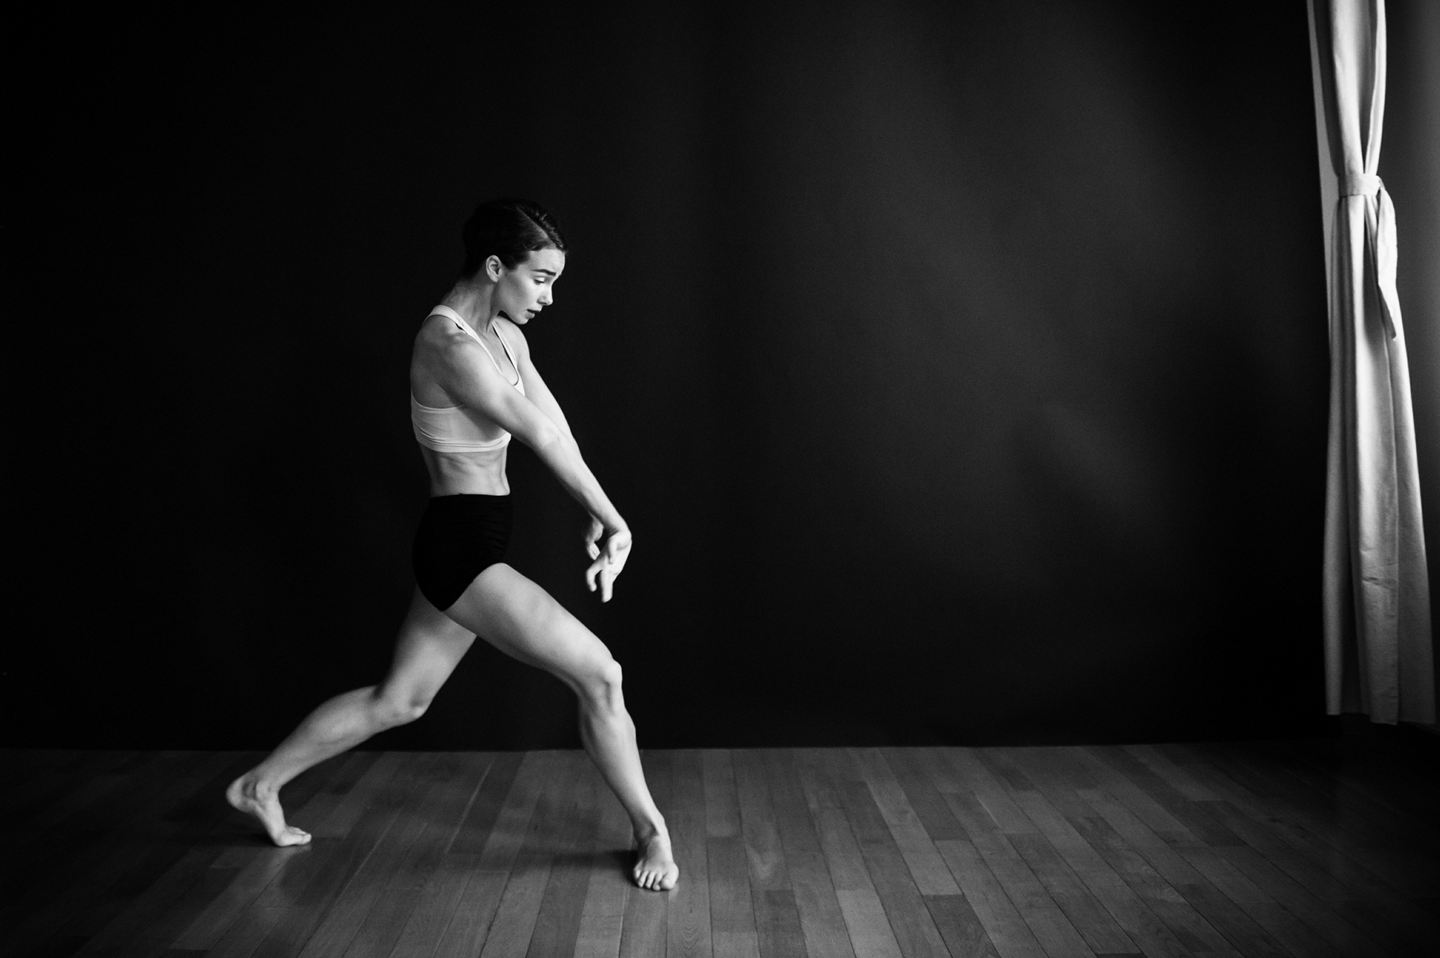 Los Angeles Dance Portrait Photo - Olga Sokolova - by Tommy Xing Photography 14.JPG